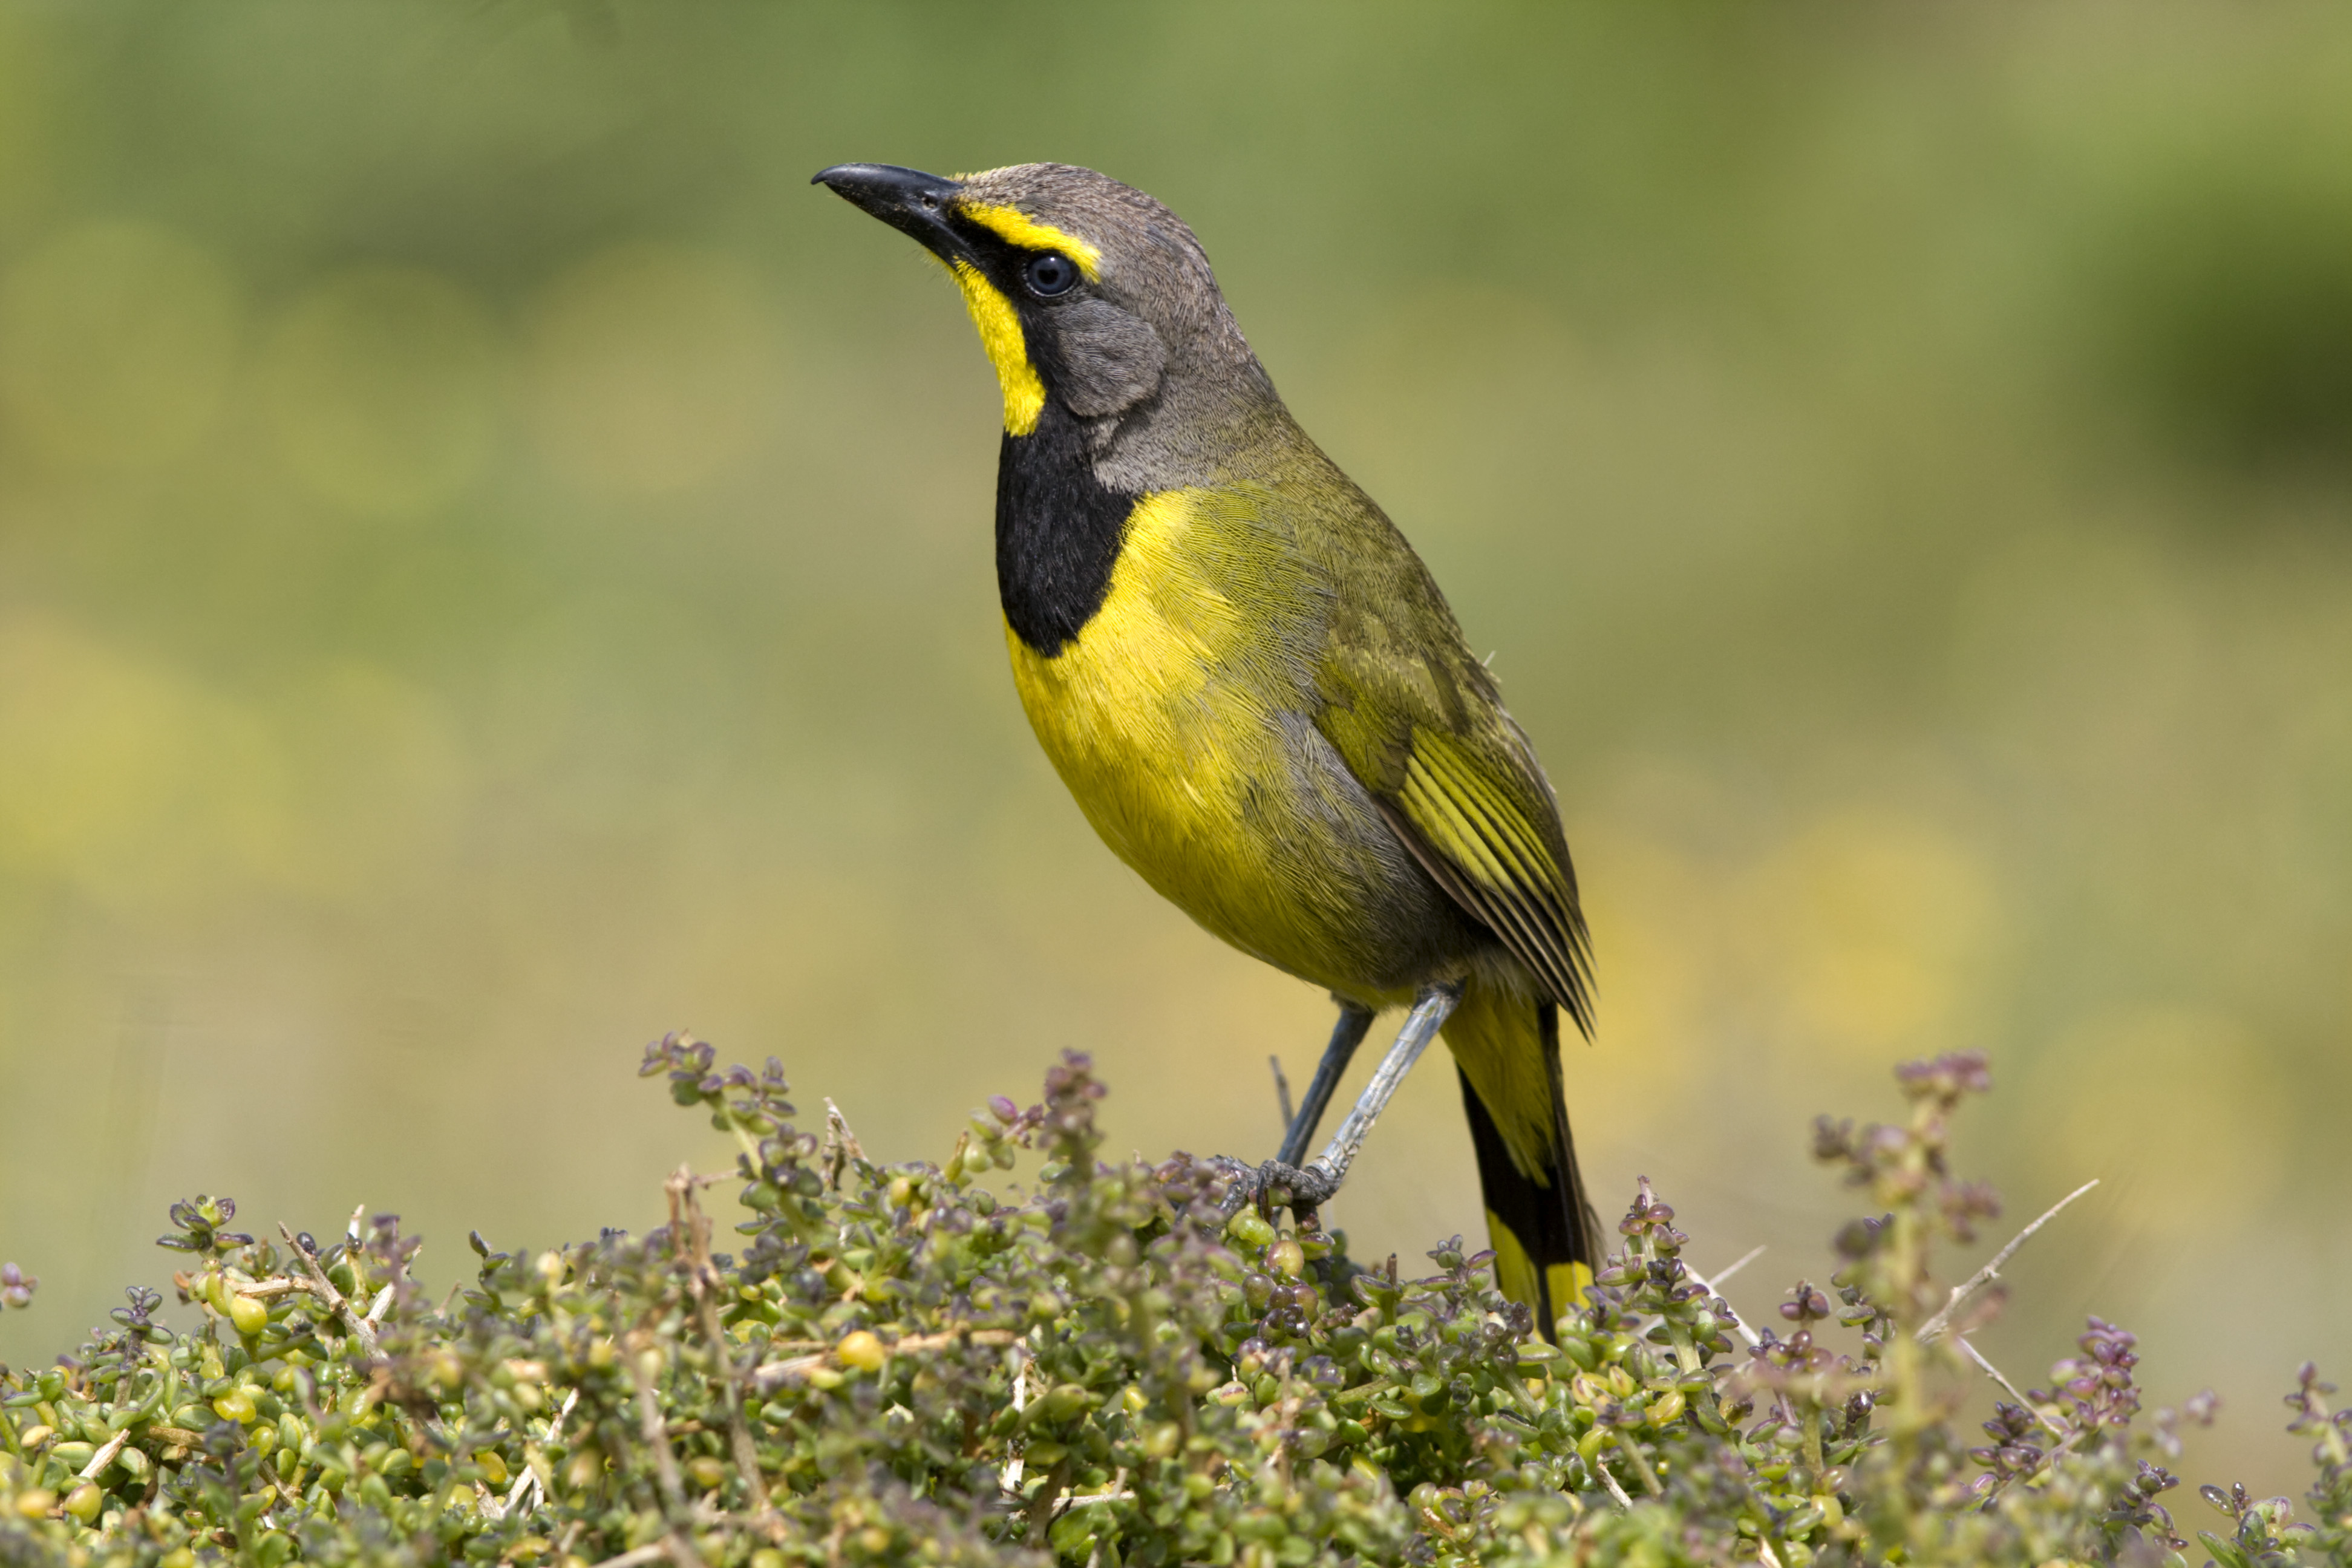 Bird-watching is popular in Mozambique